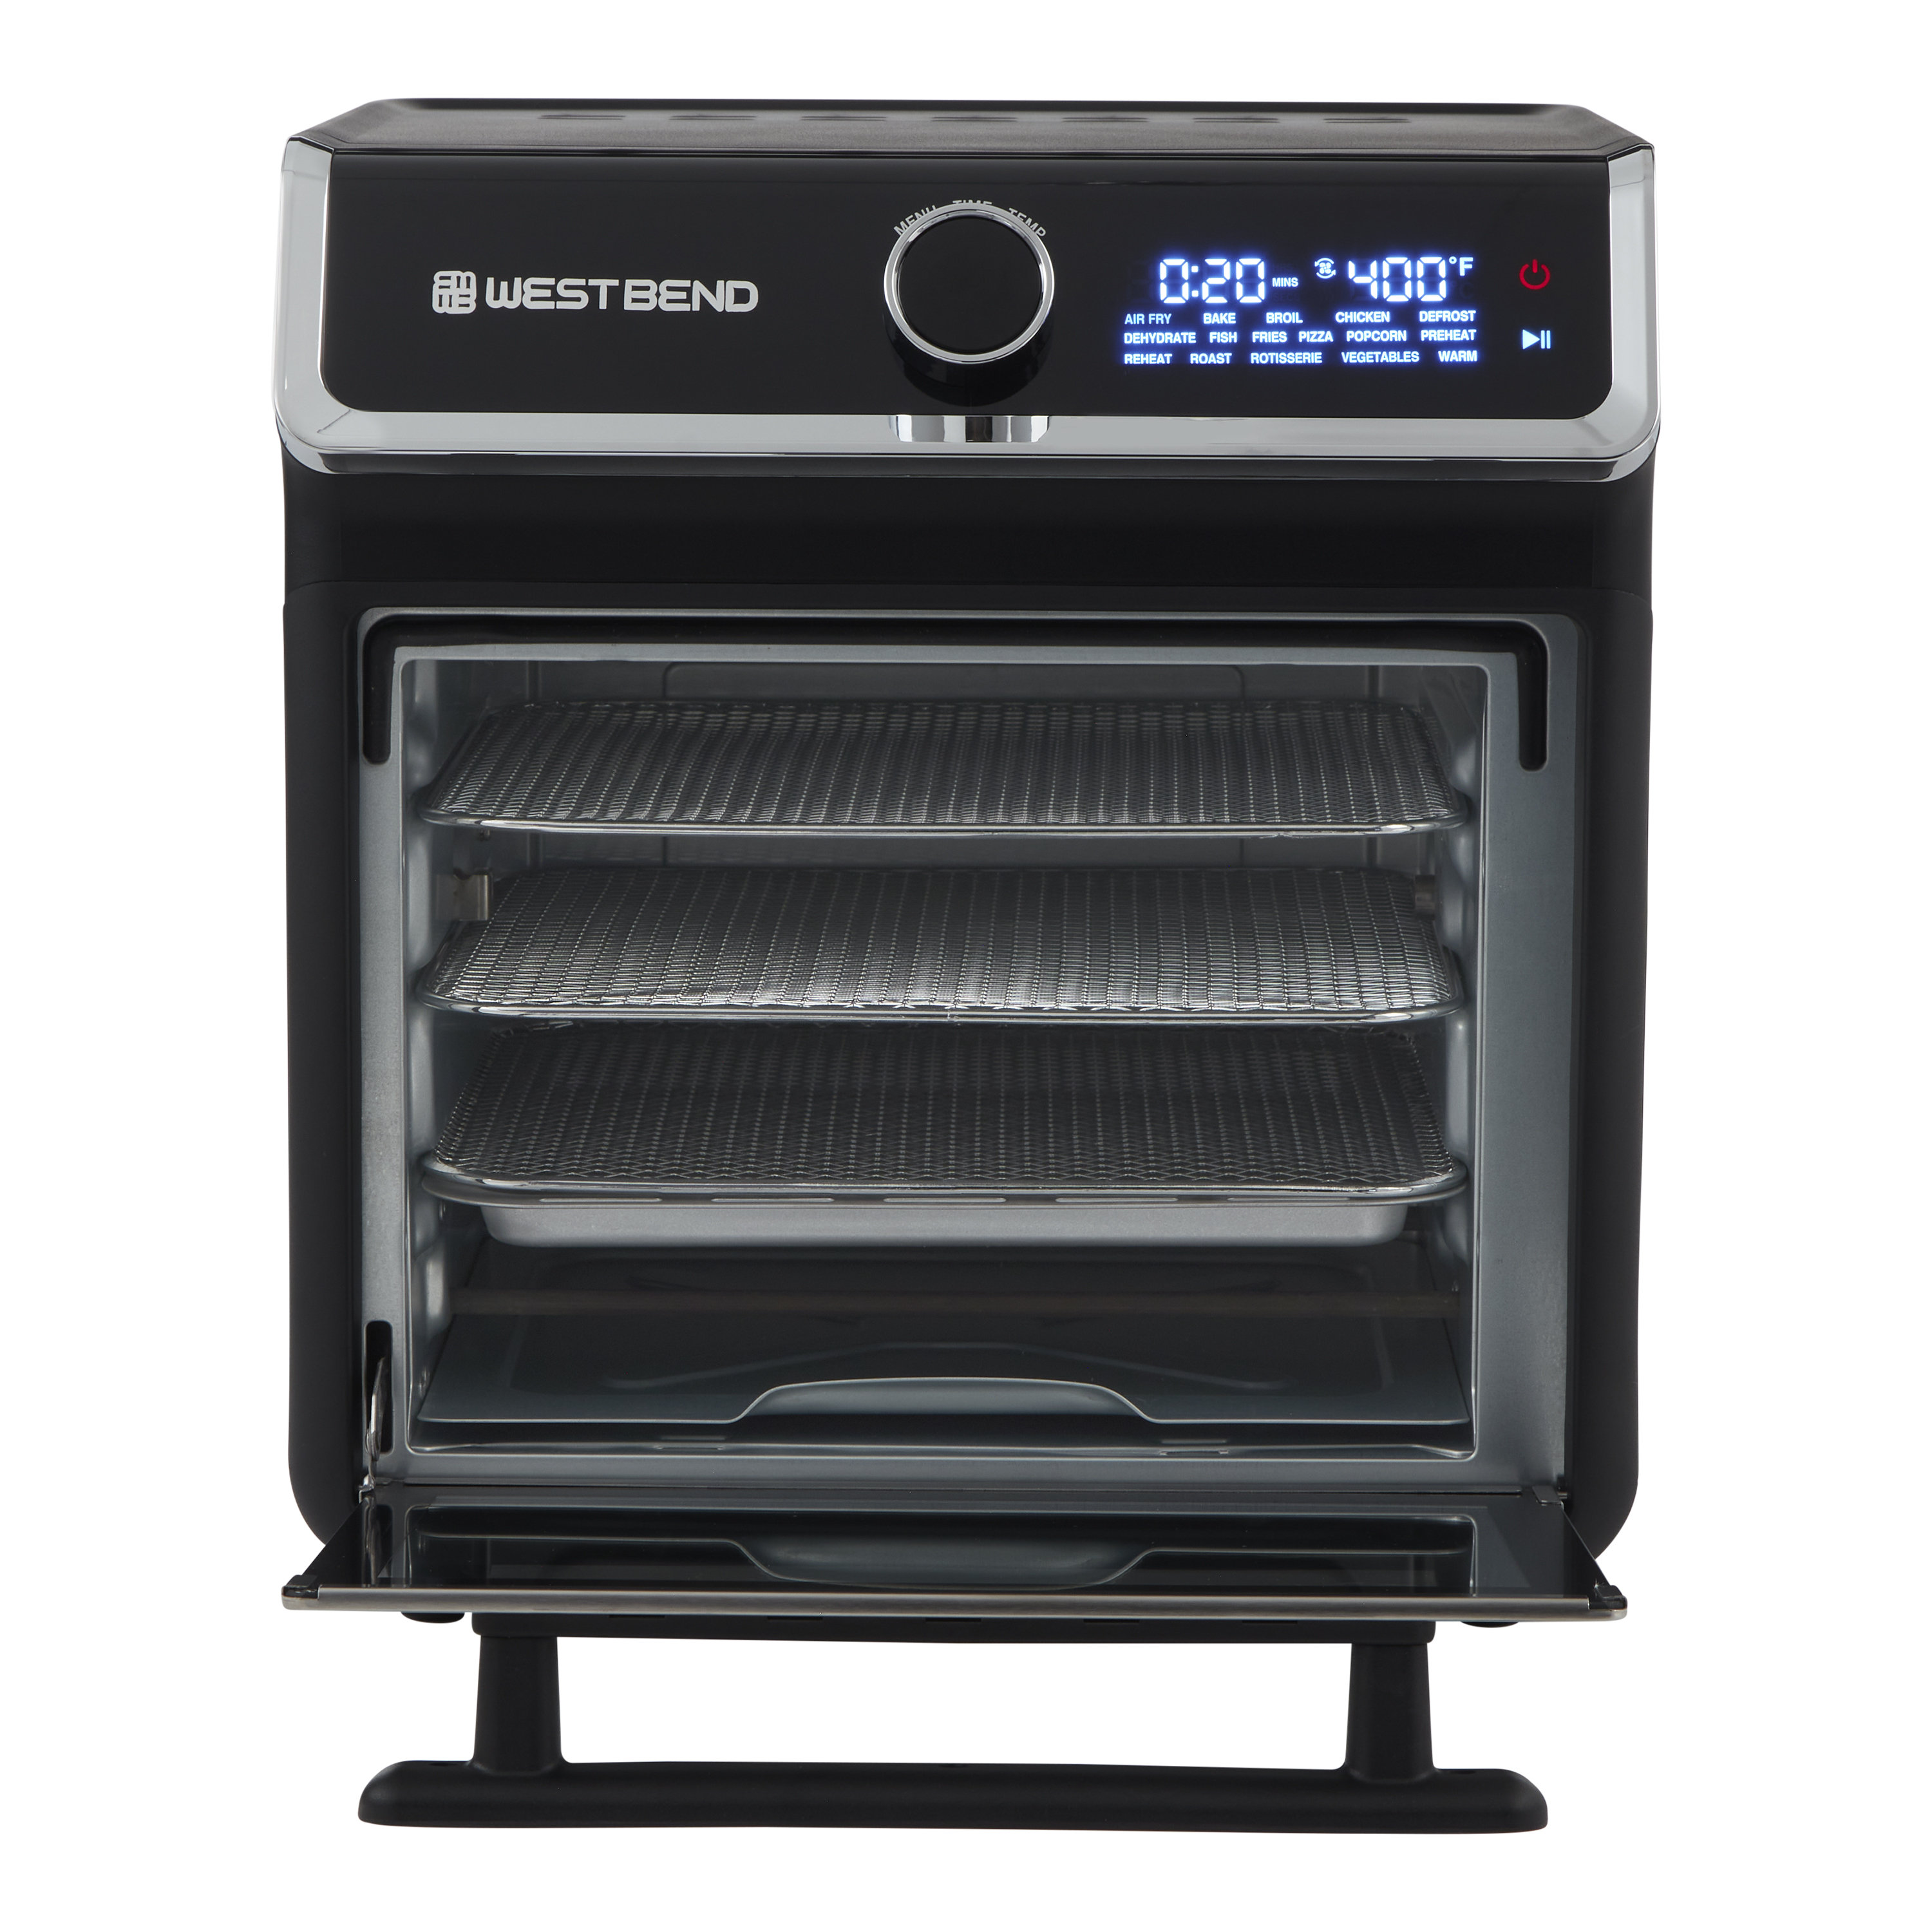 West Bend Air Fryer Oven 12.6-Quart Electric Air Fryer with 10 Digital  Quick Menu Presets - Bake, Roast, Rotisserie, Dehydrate, Re-Heat,  1700-Watt, Black 